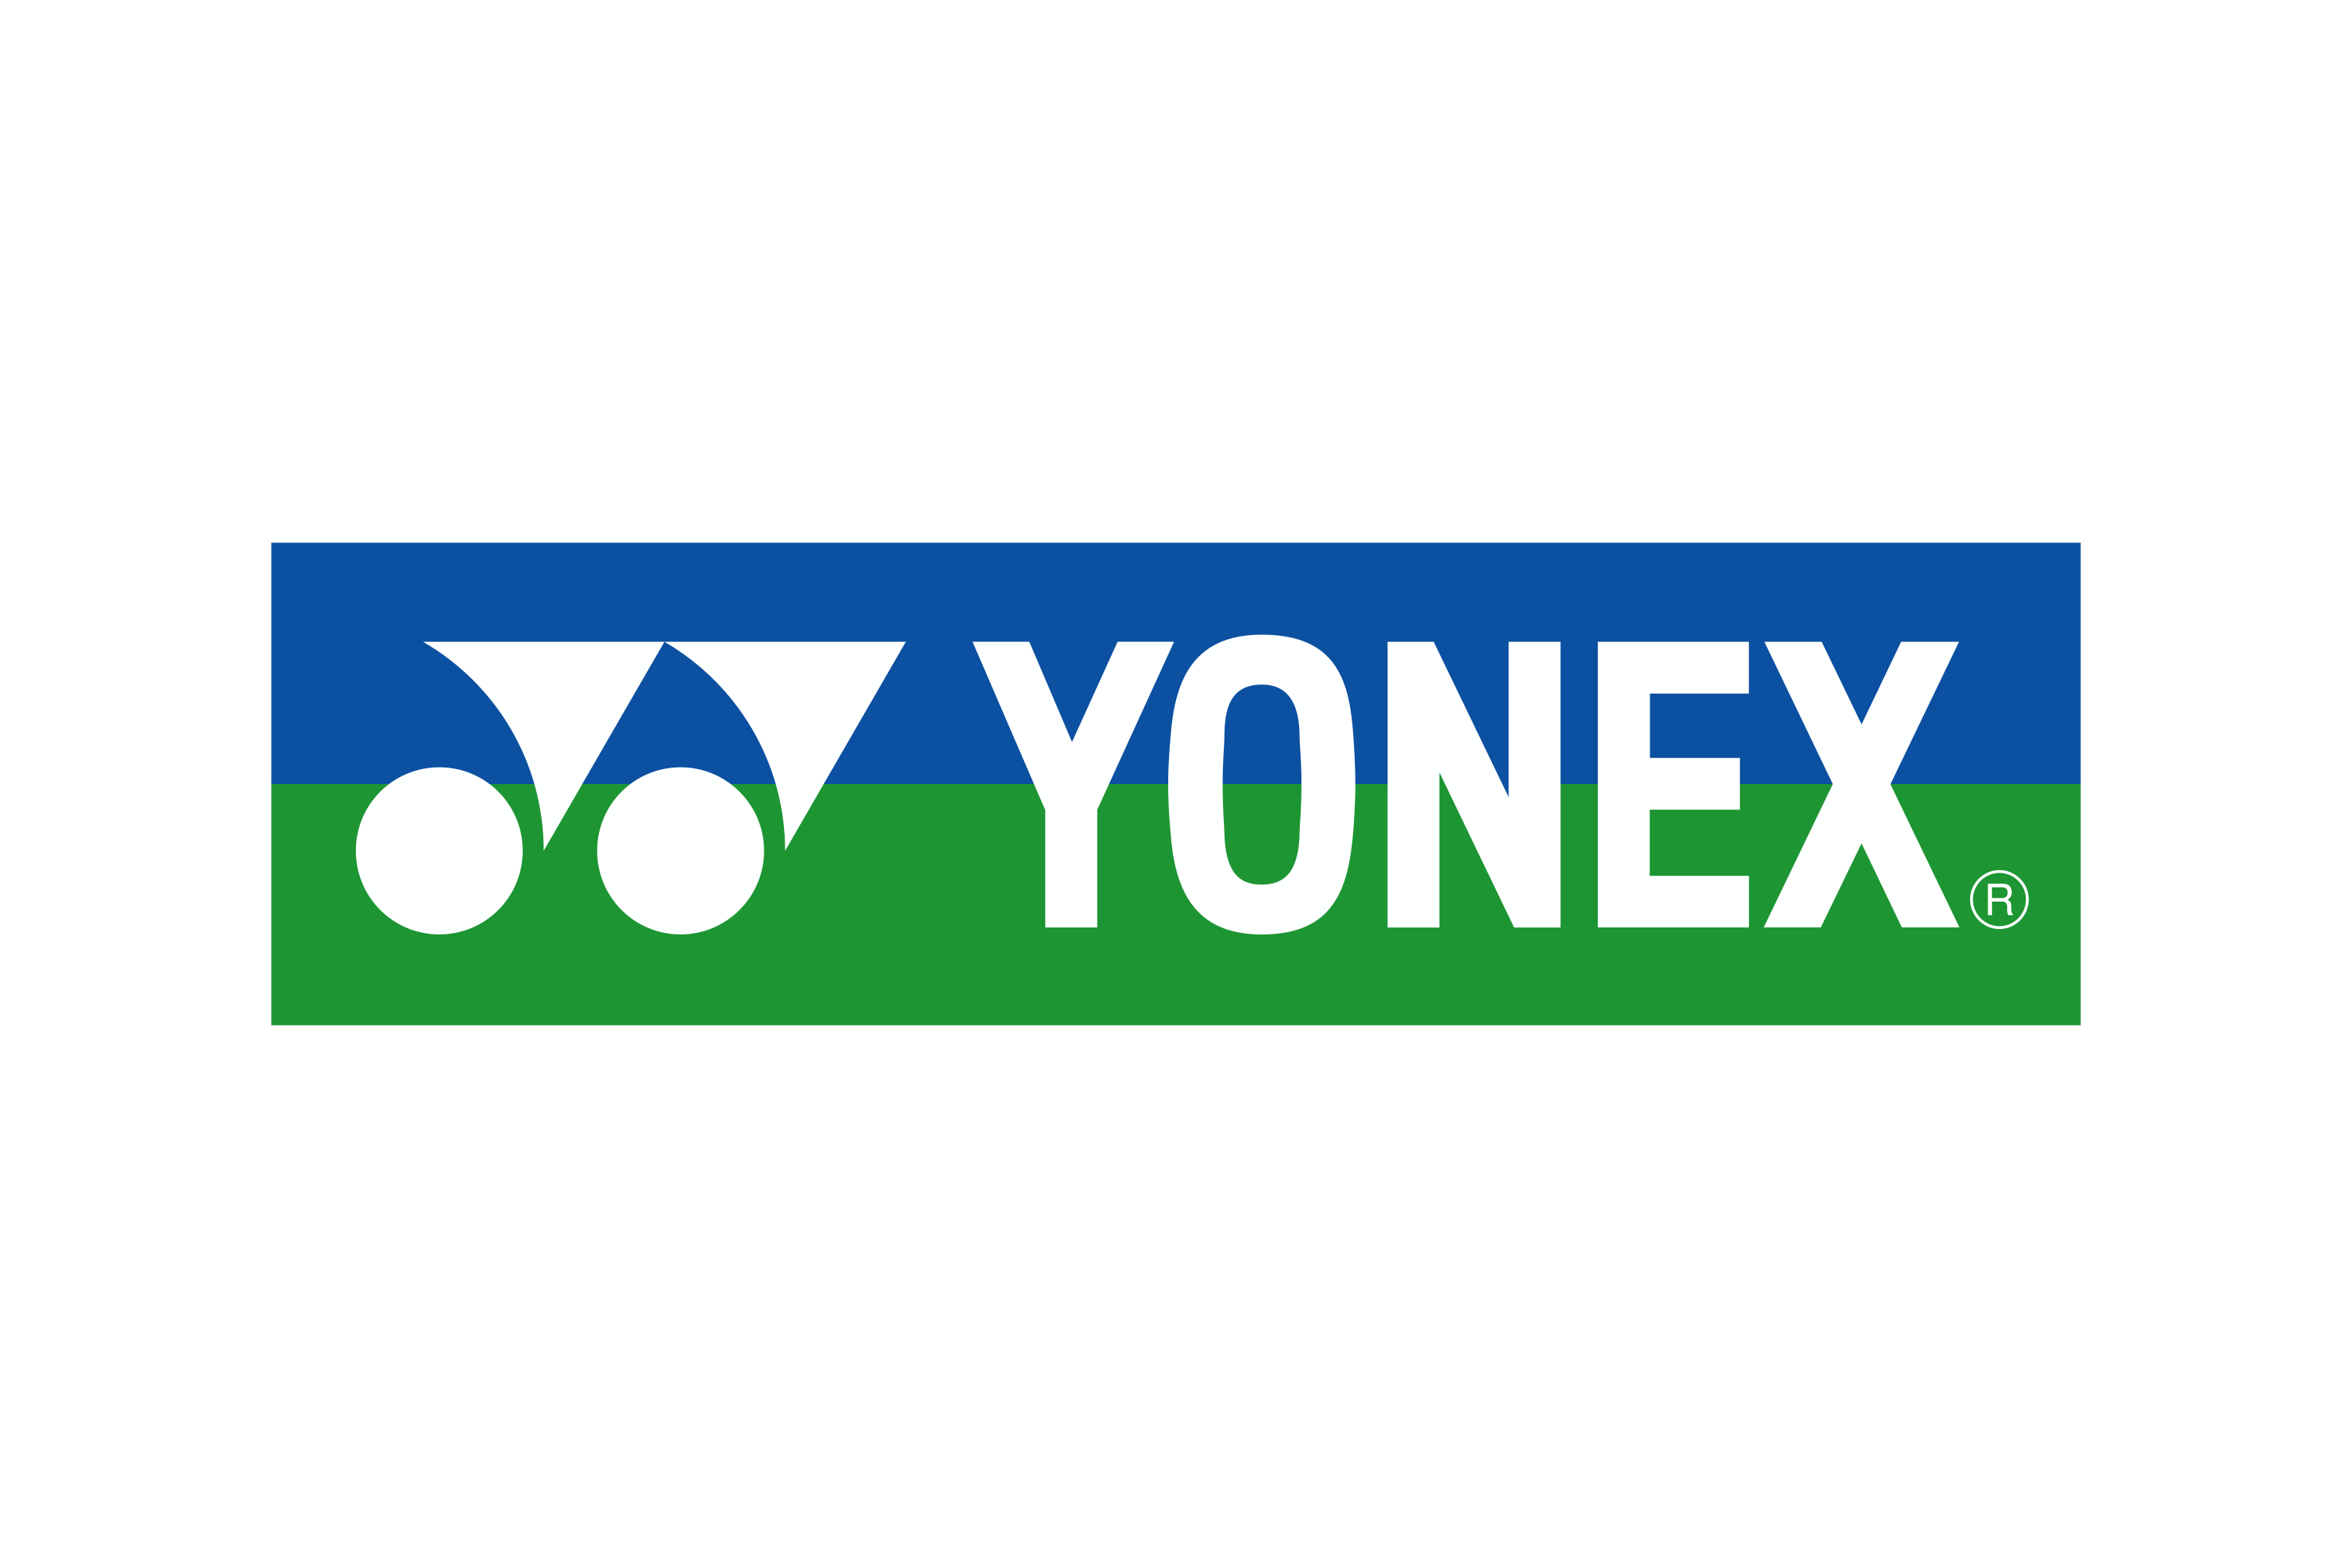 Download Yonex Logo in SVG Vector or PNG File Format